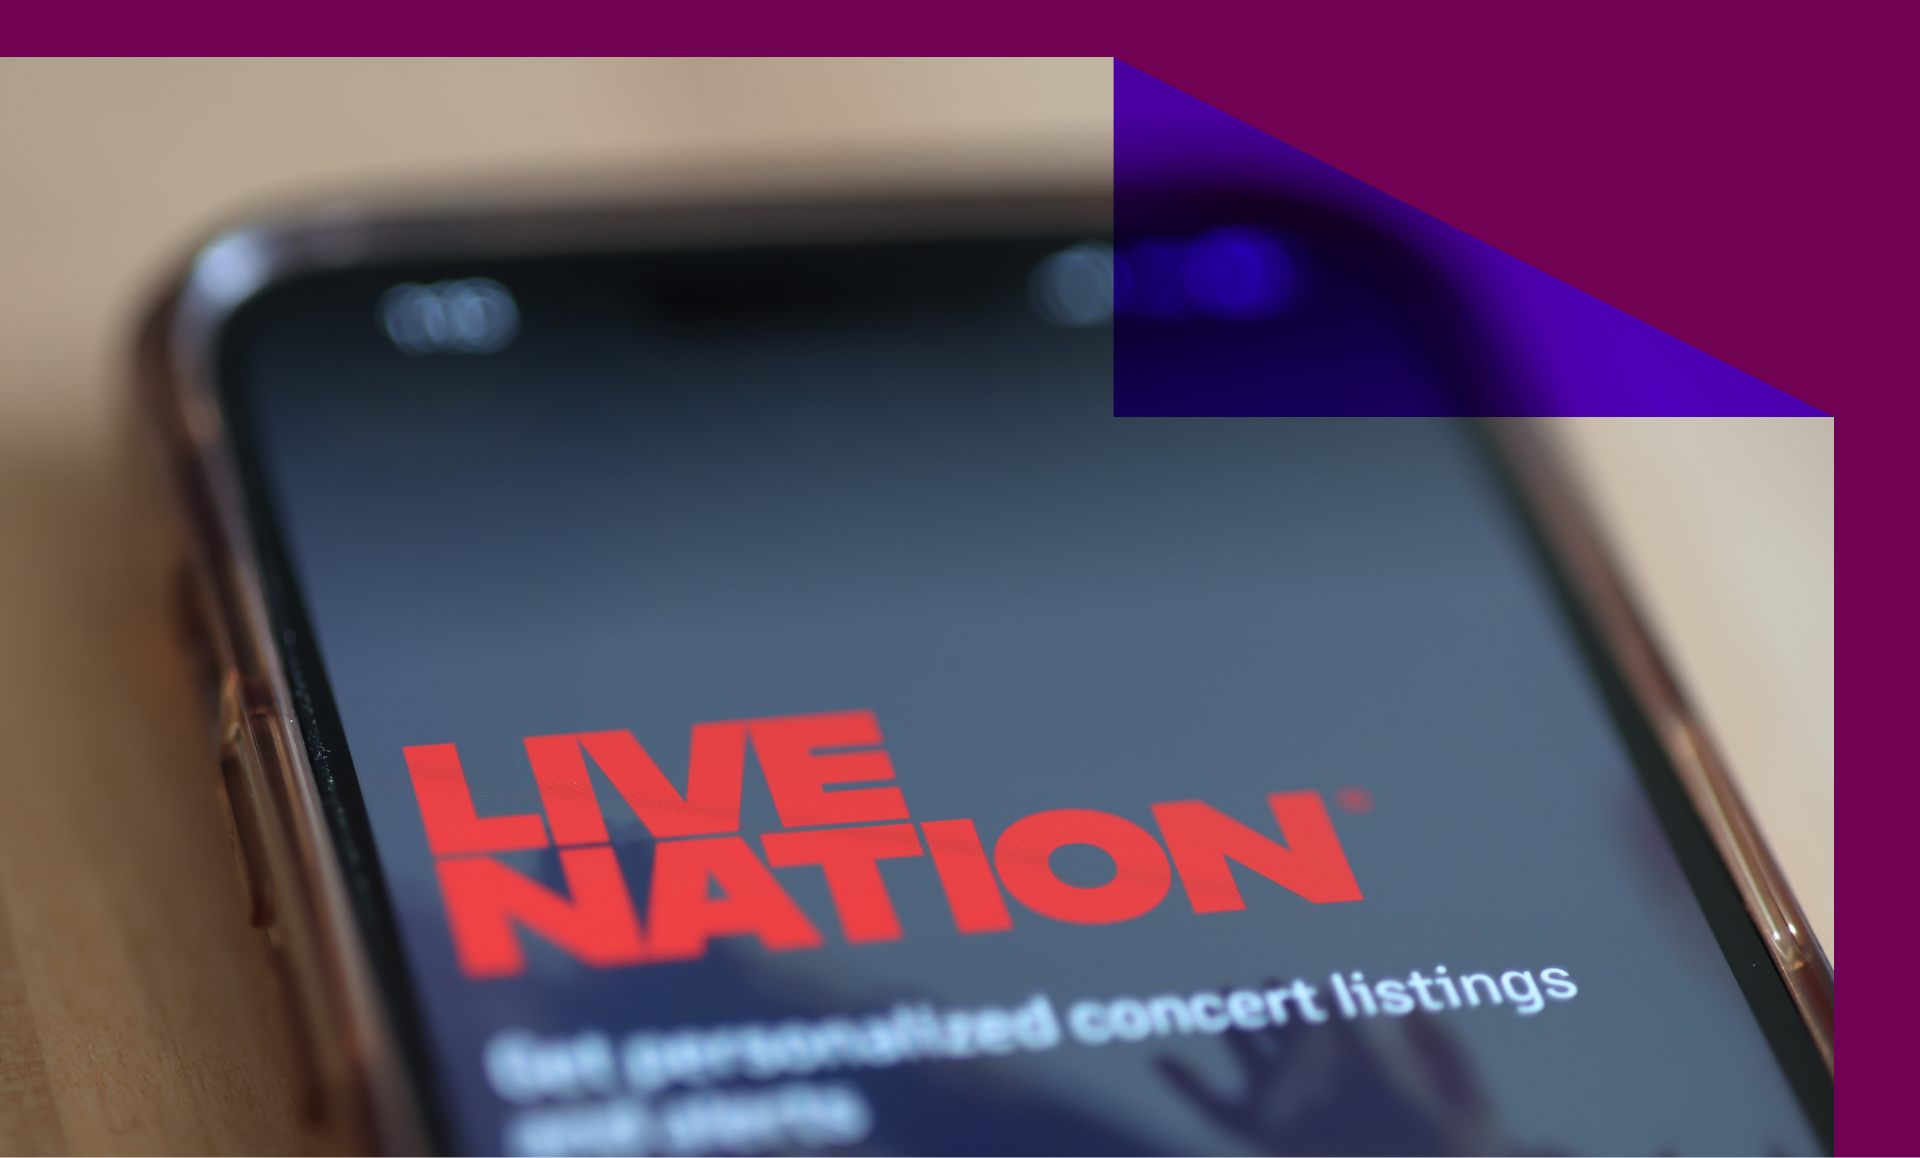 Live Nation logo on a phone